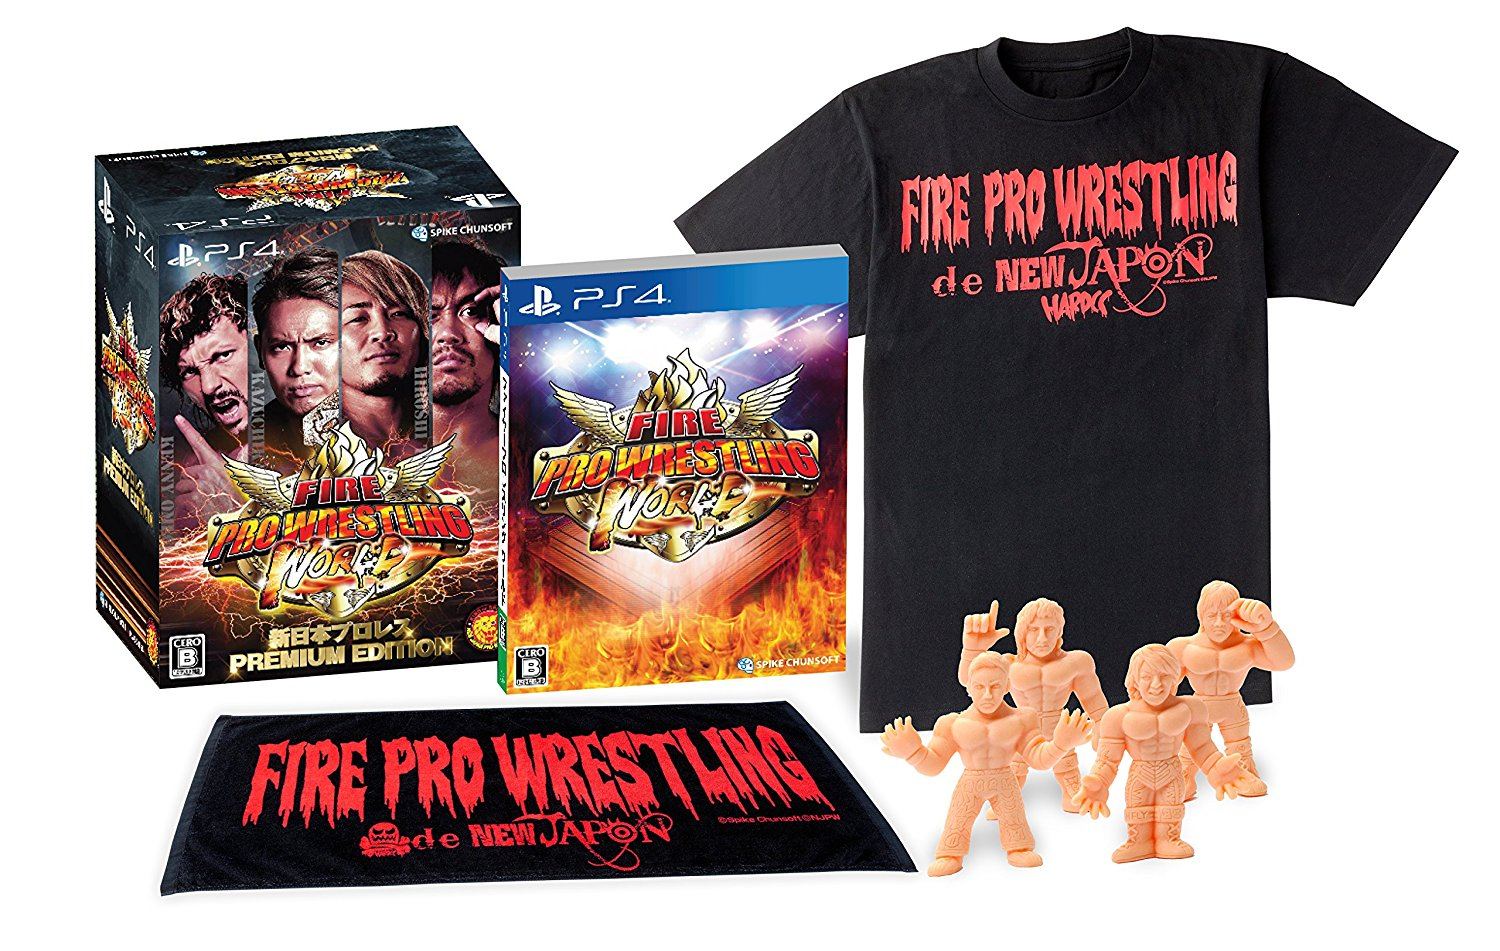 Fire Pro Wrestling World Premium Edition [Limited Edition] (Japan)